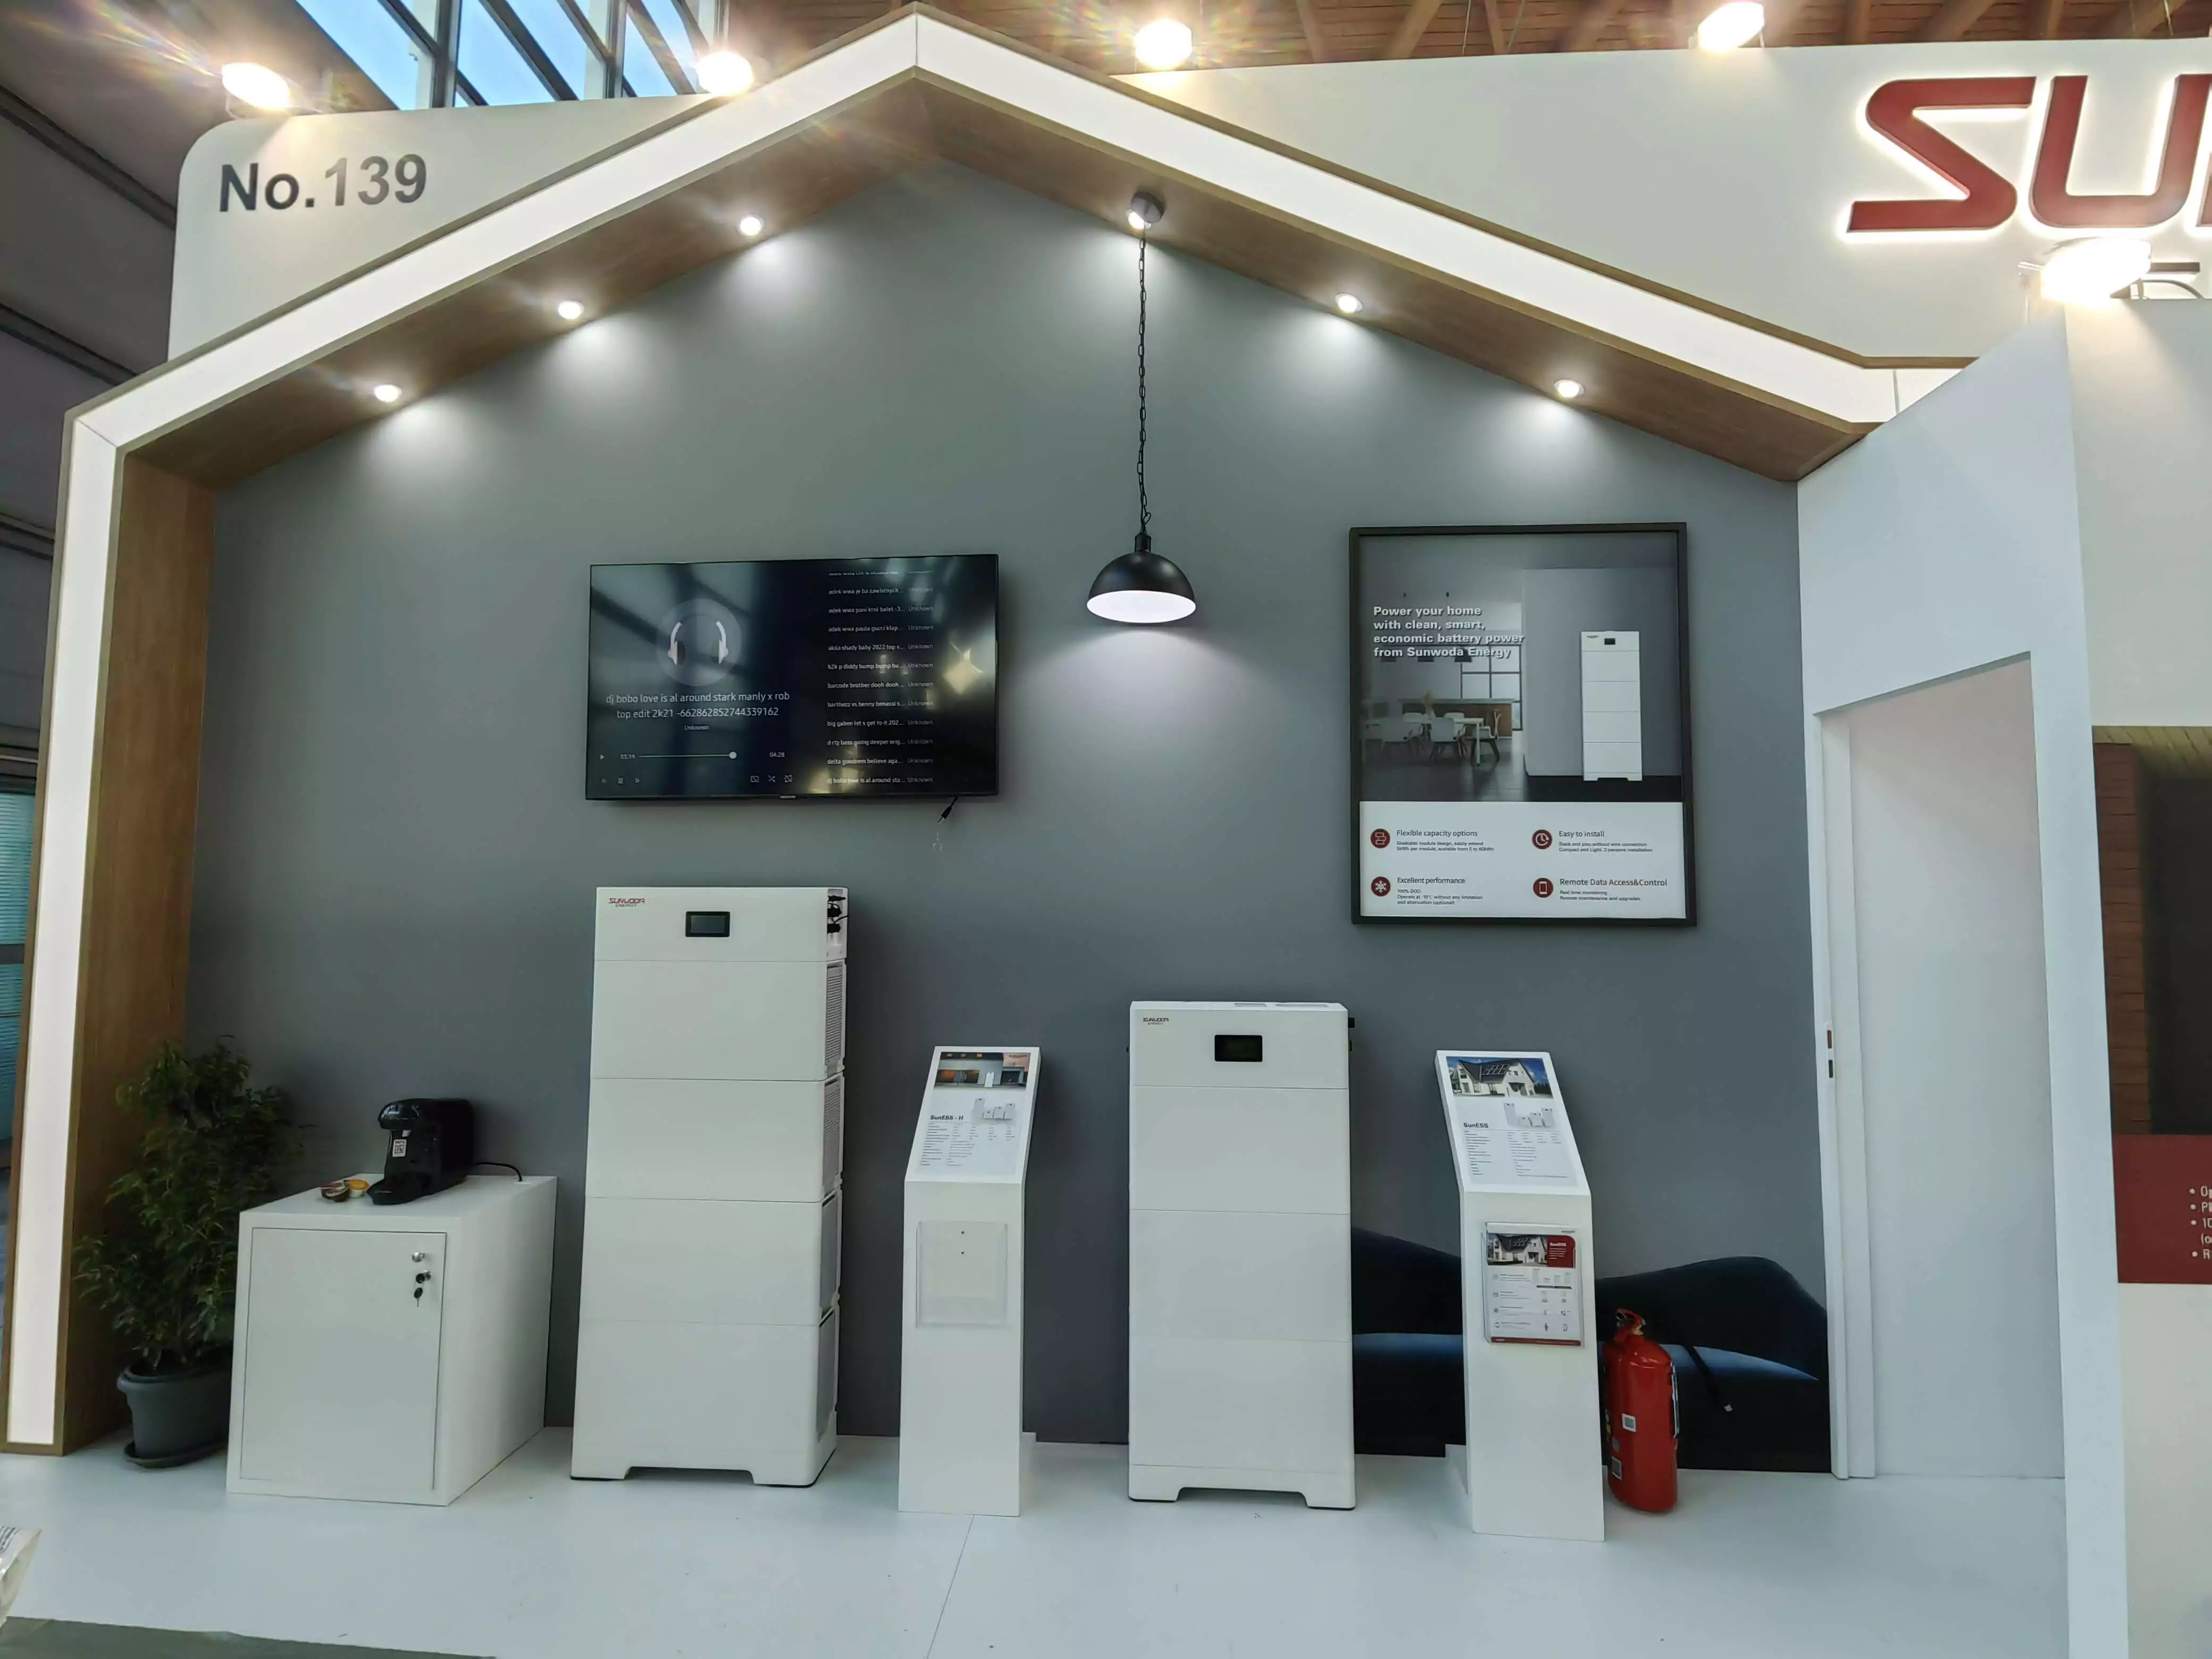 Sunwoda Residential Energy Storage Solution at KEY ENERGY 